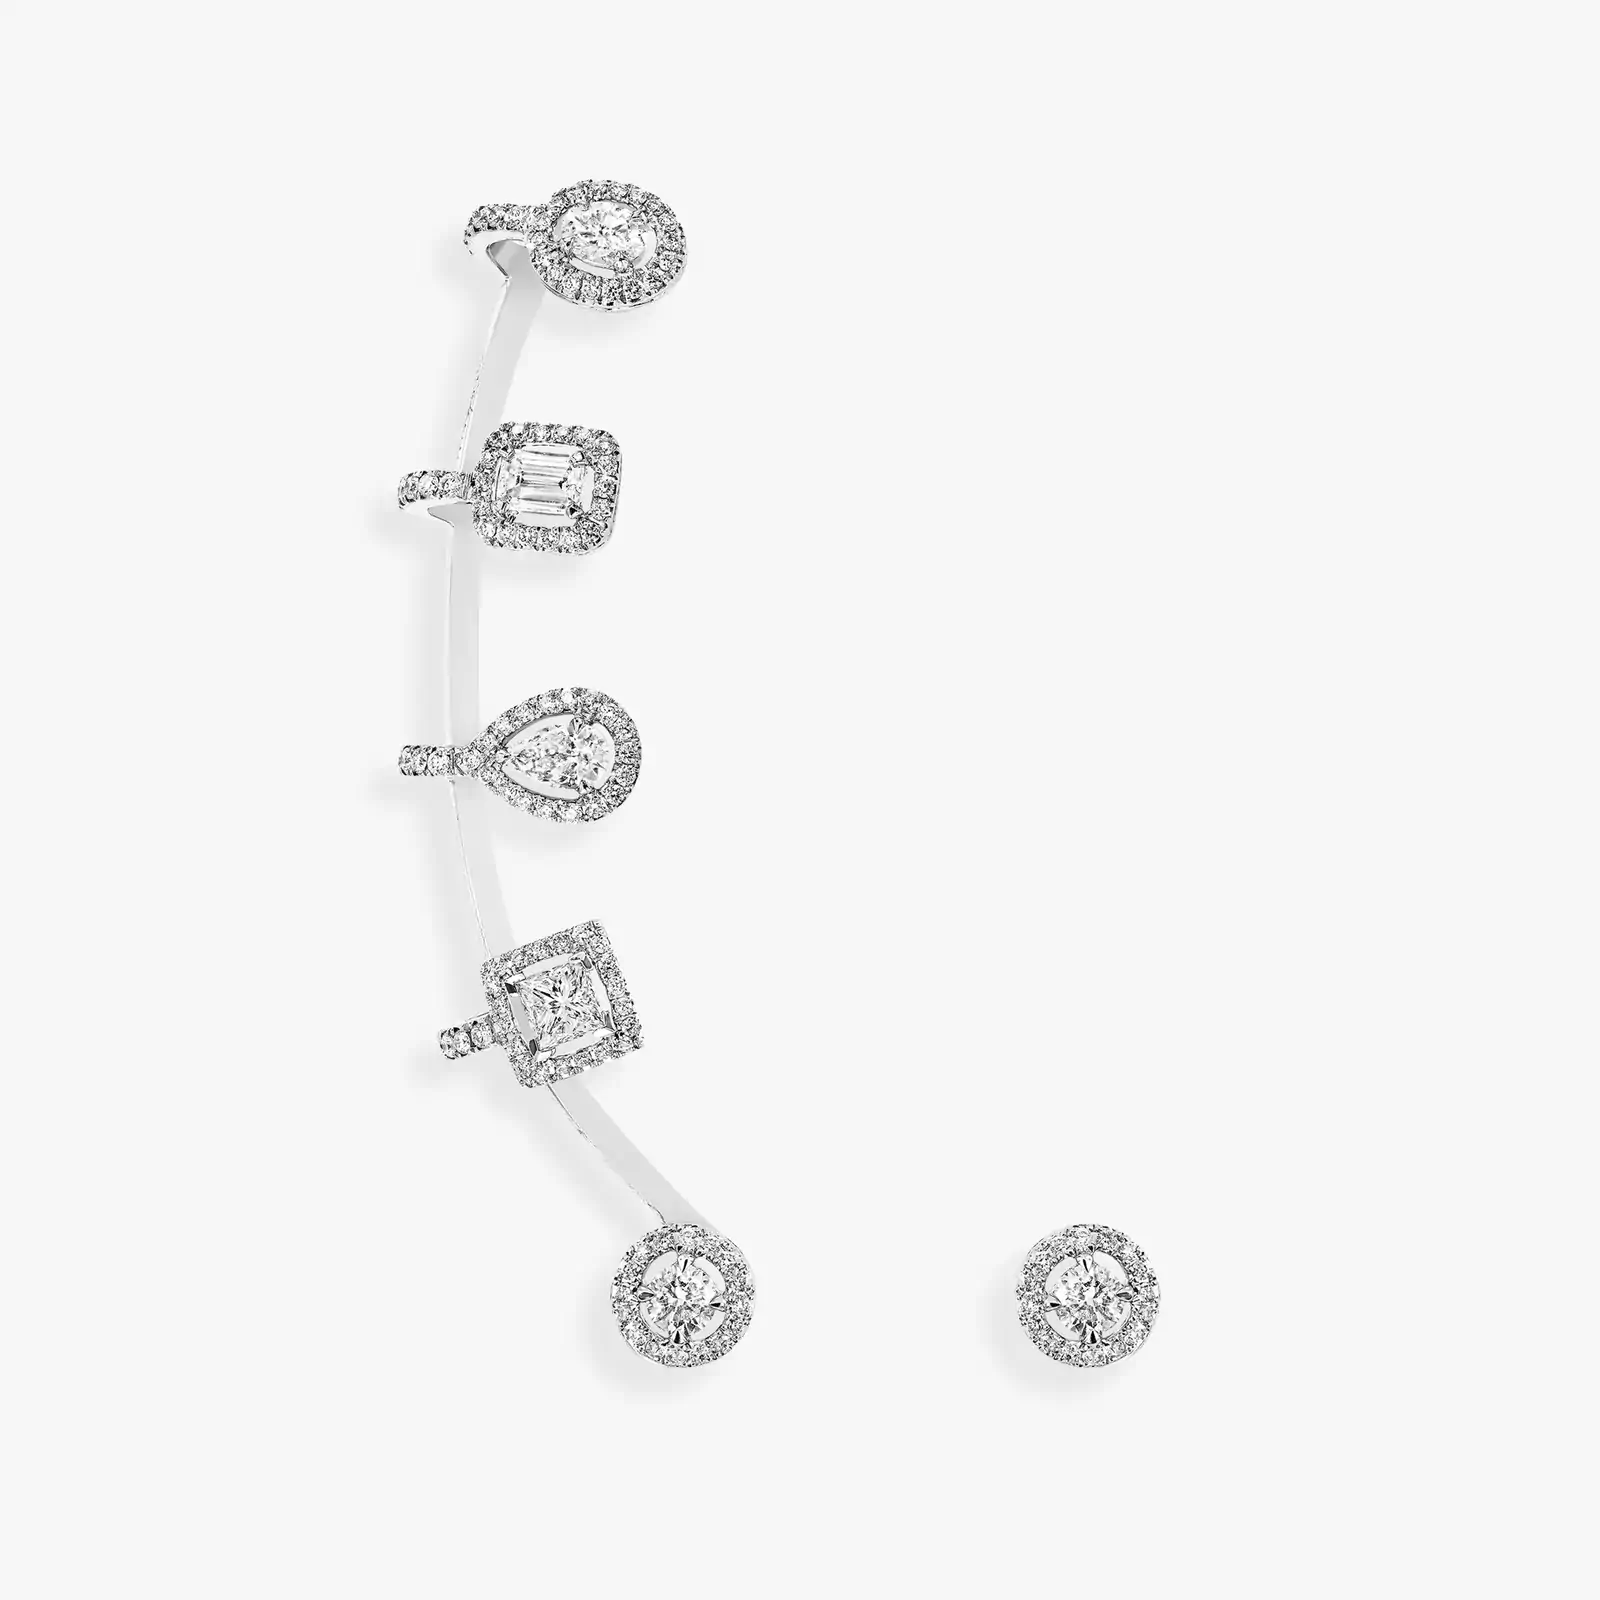 Boucles d'oreilles Femme Or Blanc Diamant My Twin Multiformes 06158-WG